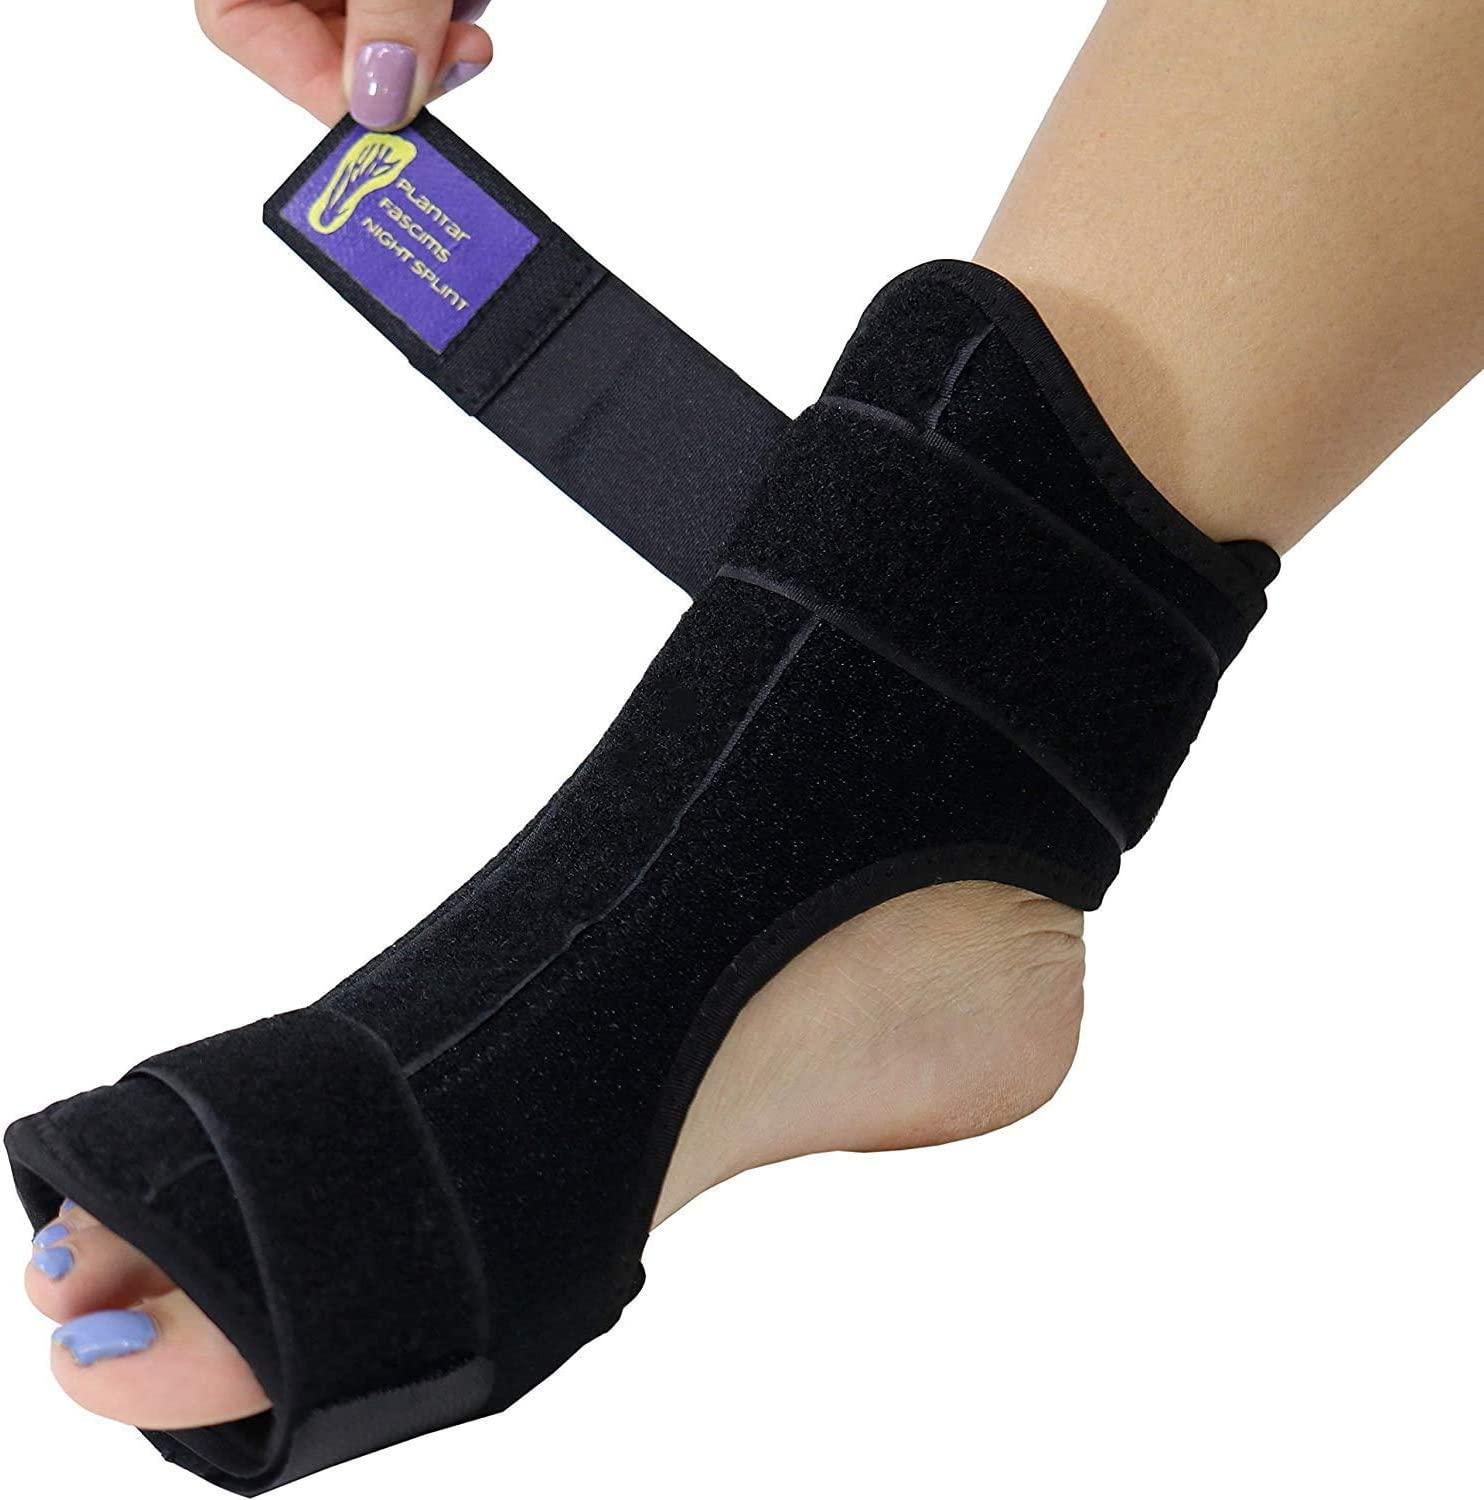 Plantar Fasciitis Night Splint Adjustable Foot Brace, Plantar Fasciitis & Heel  Pain Ireland